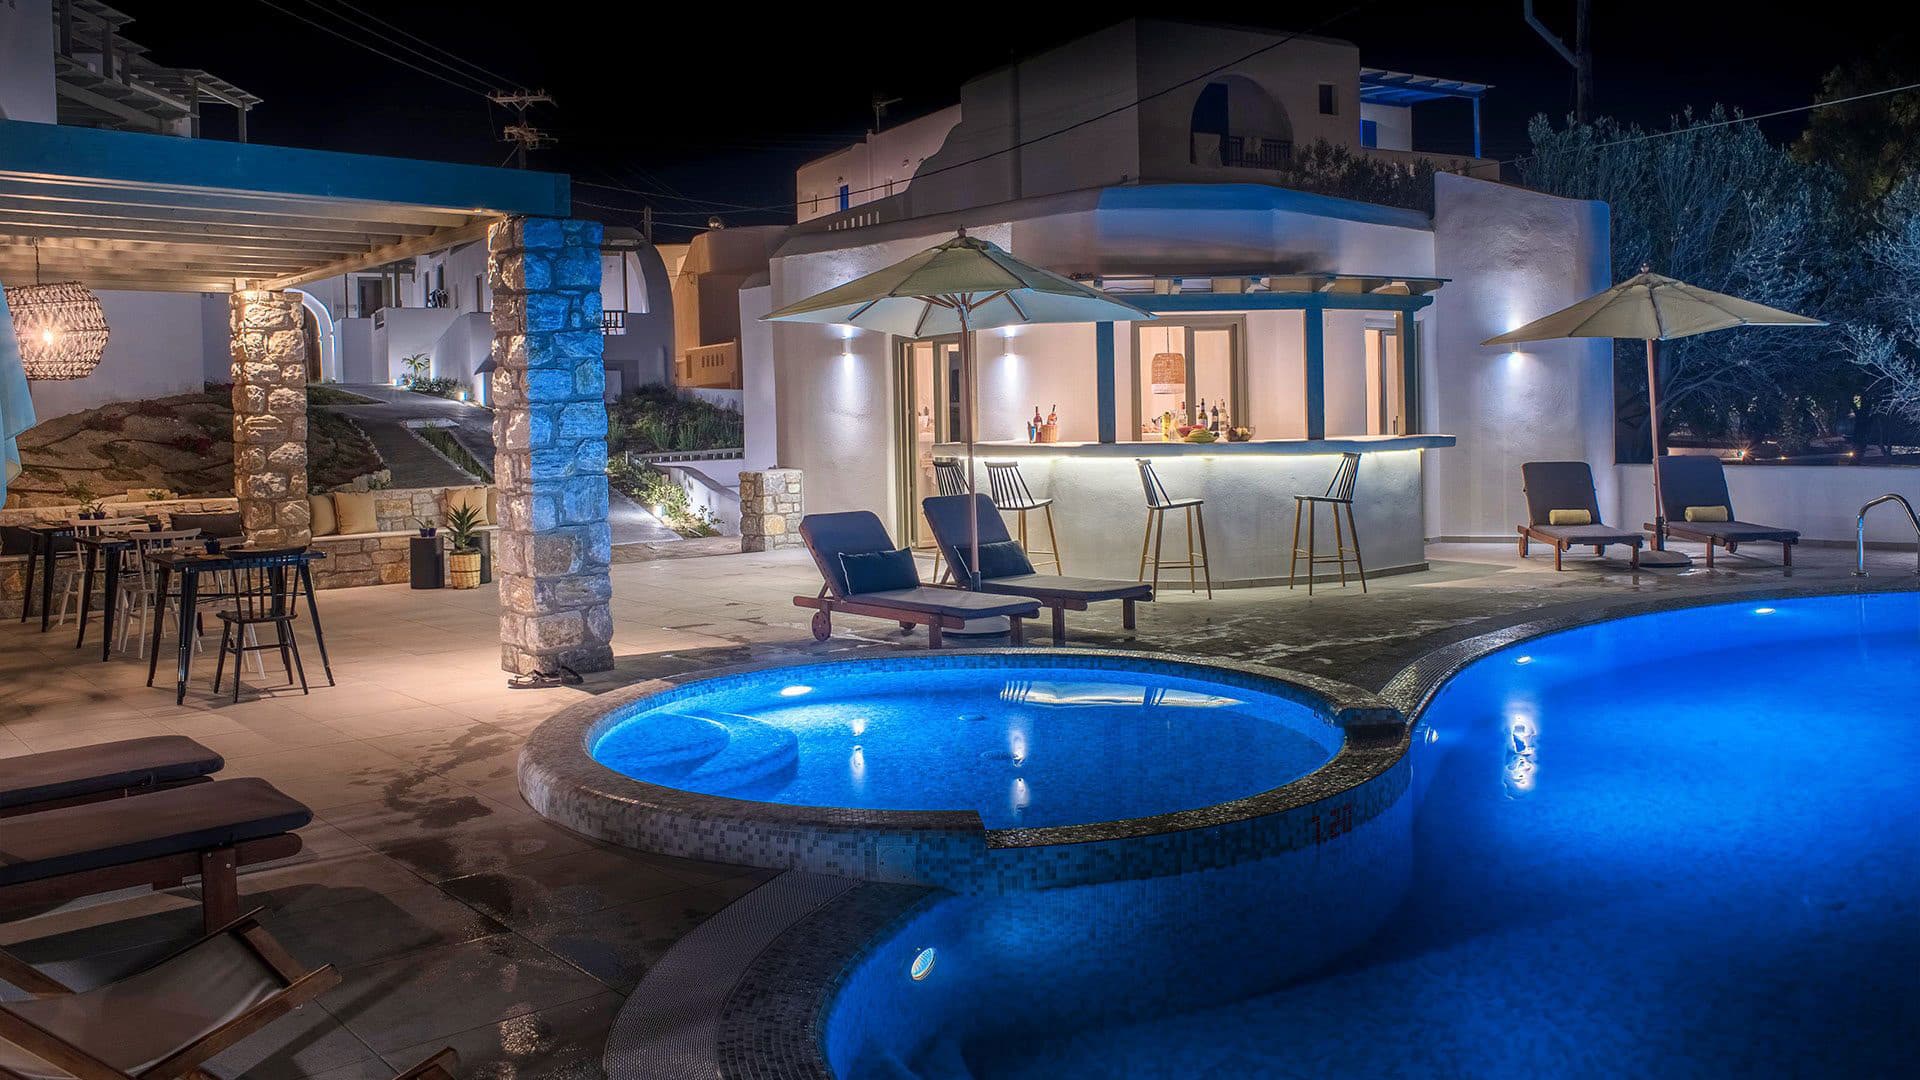 MELIDRON Hotel a Naxos